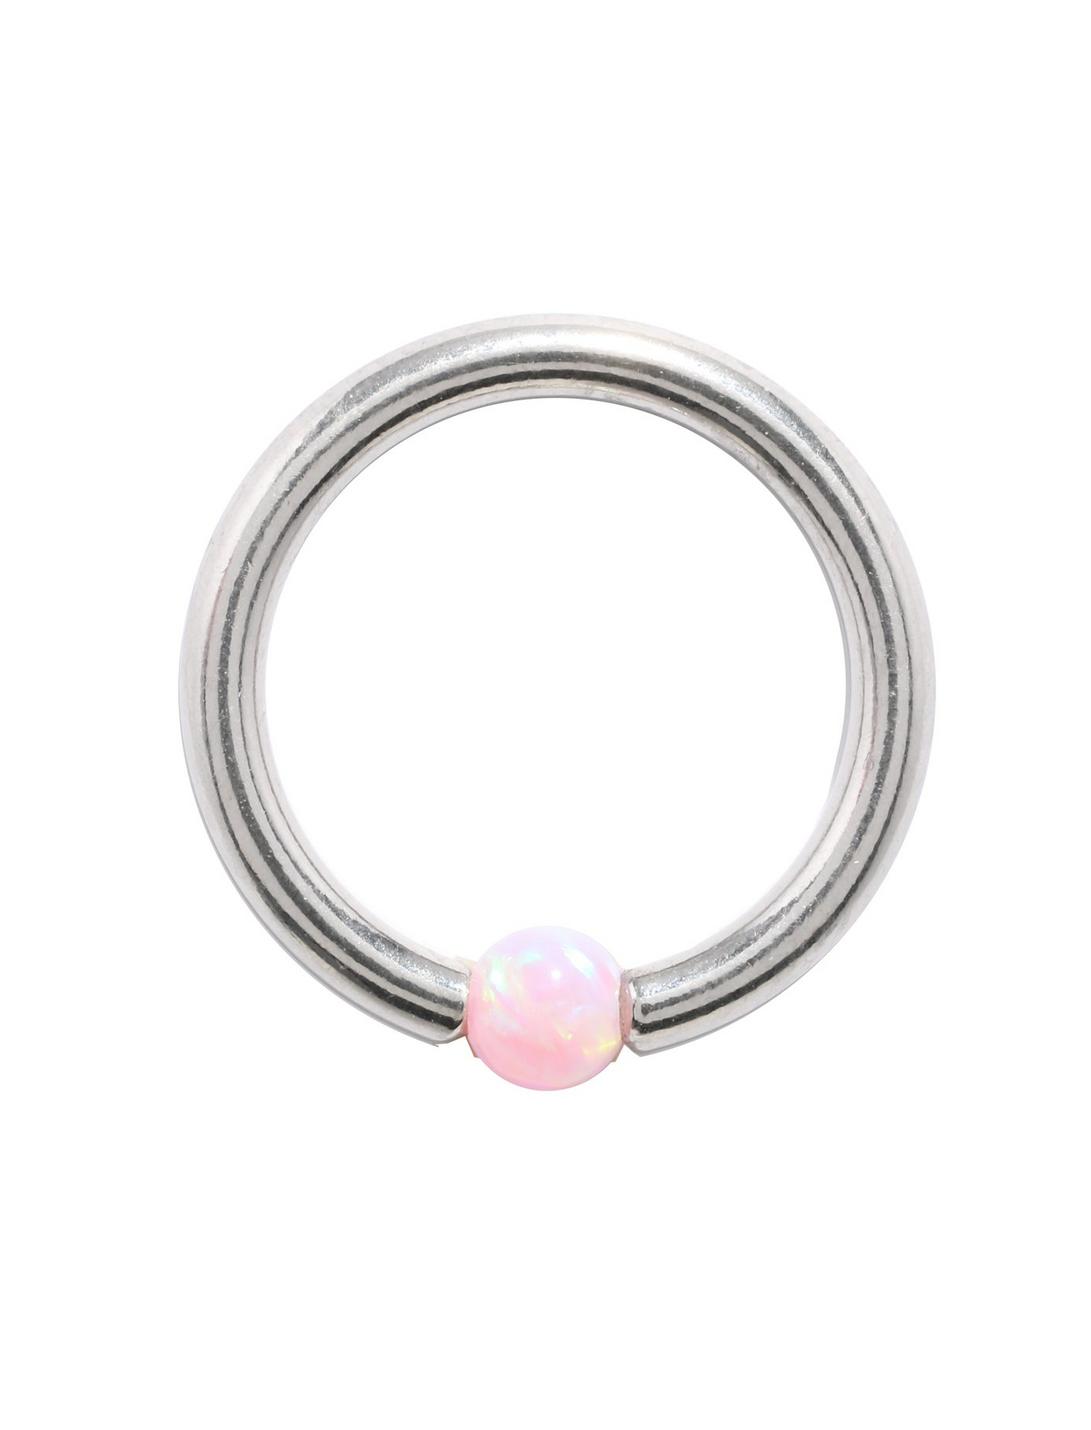 14G 7/16" Pink Opal Surgical Steel Captive Hoop, SILVER, hi-res